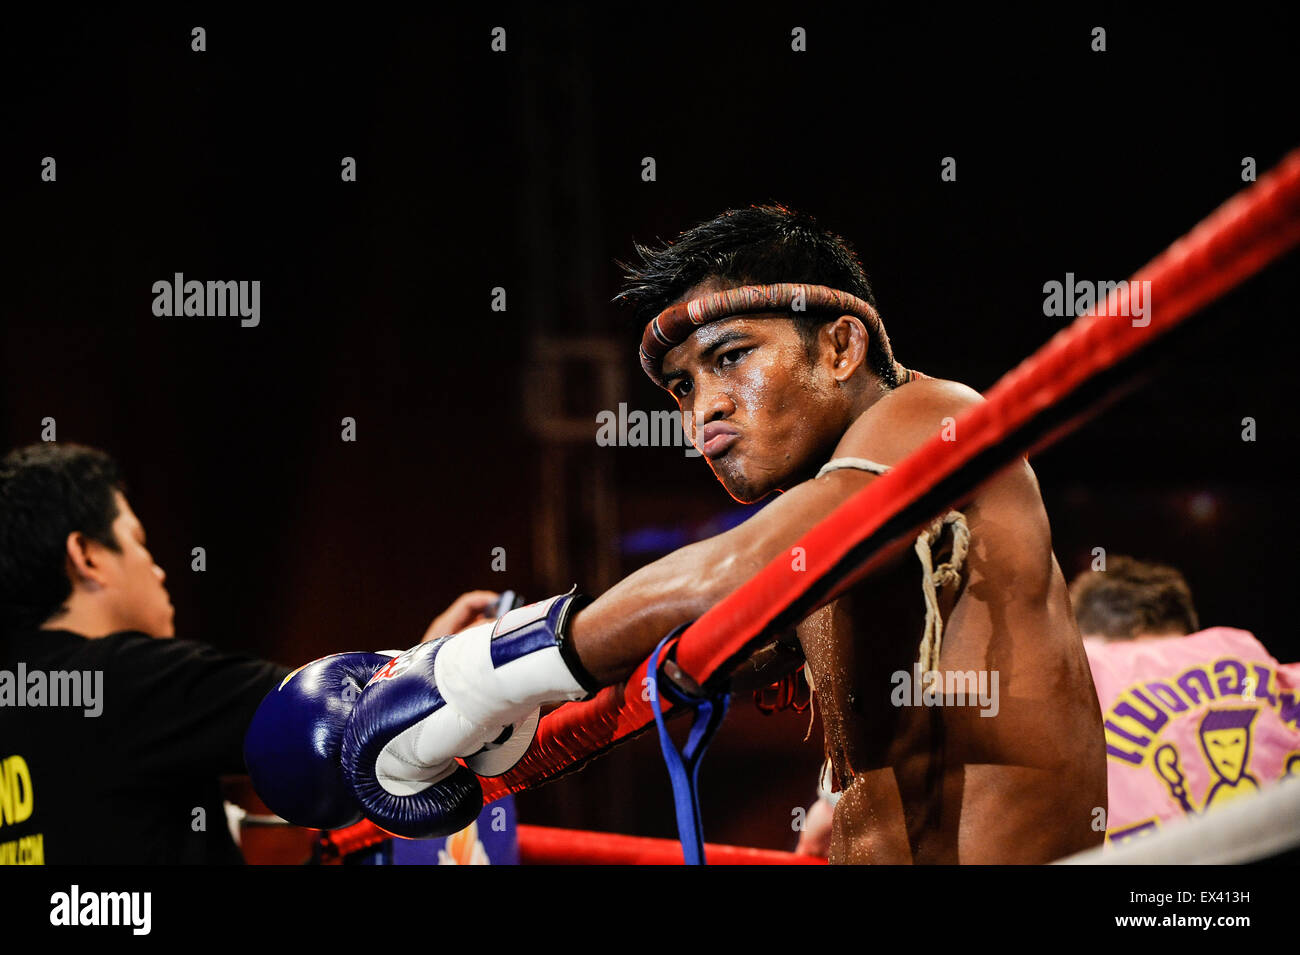 Muay Thai Kickboxer pre fight Stock Photo